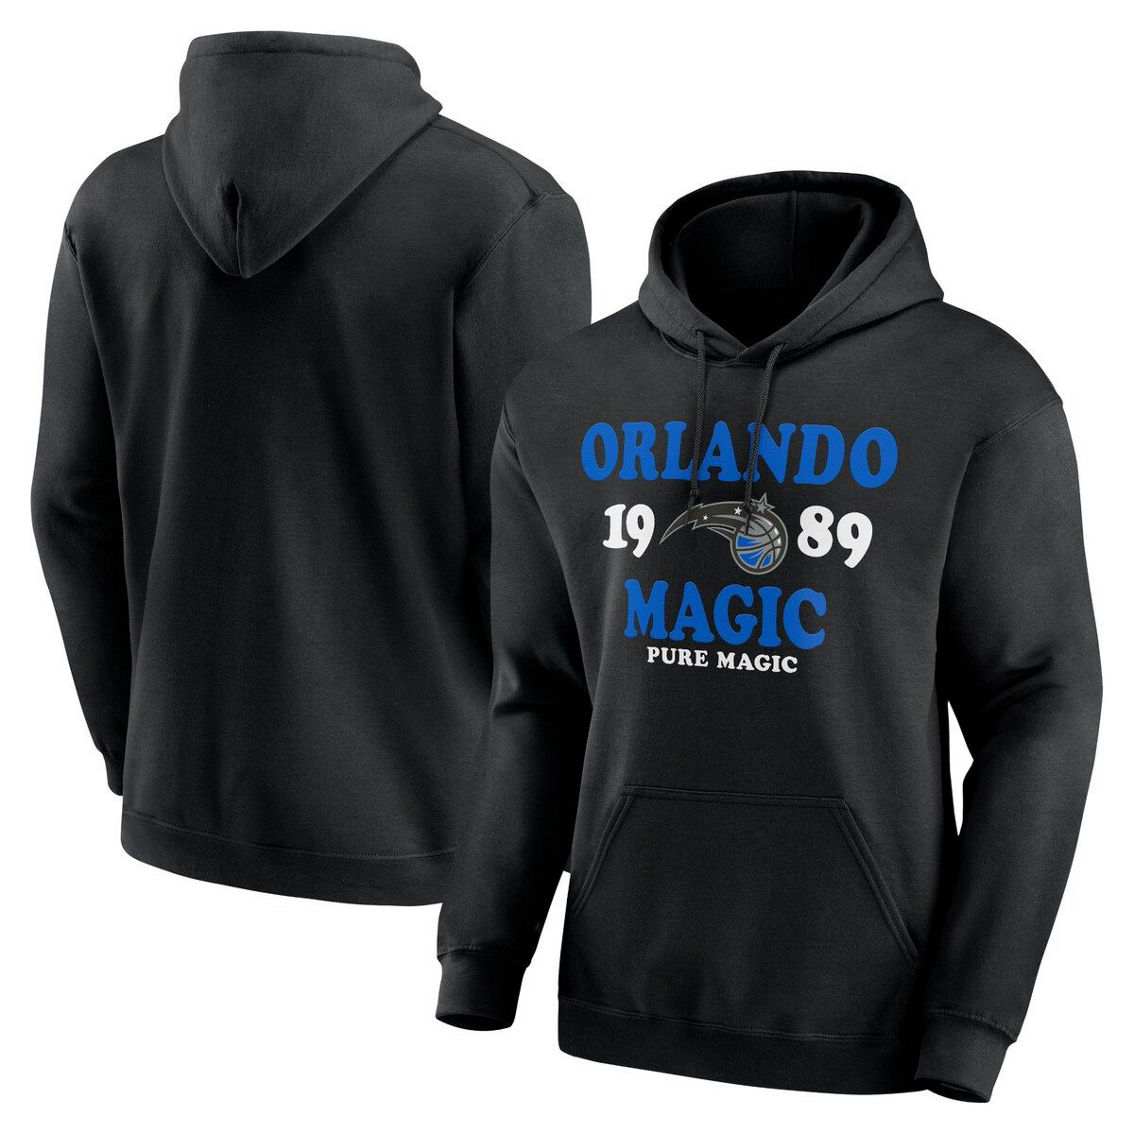 Fanatics Brands - White Label Men's Black Orlando Magic Fierce Competitor  Pullover Hoodie, Fan Shop